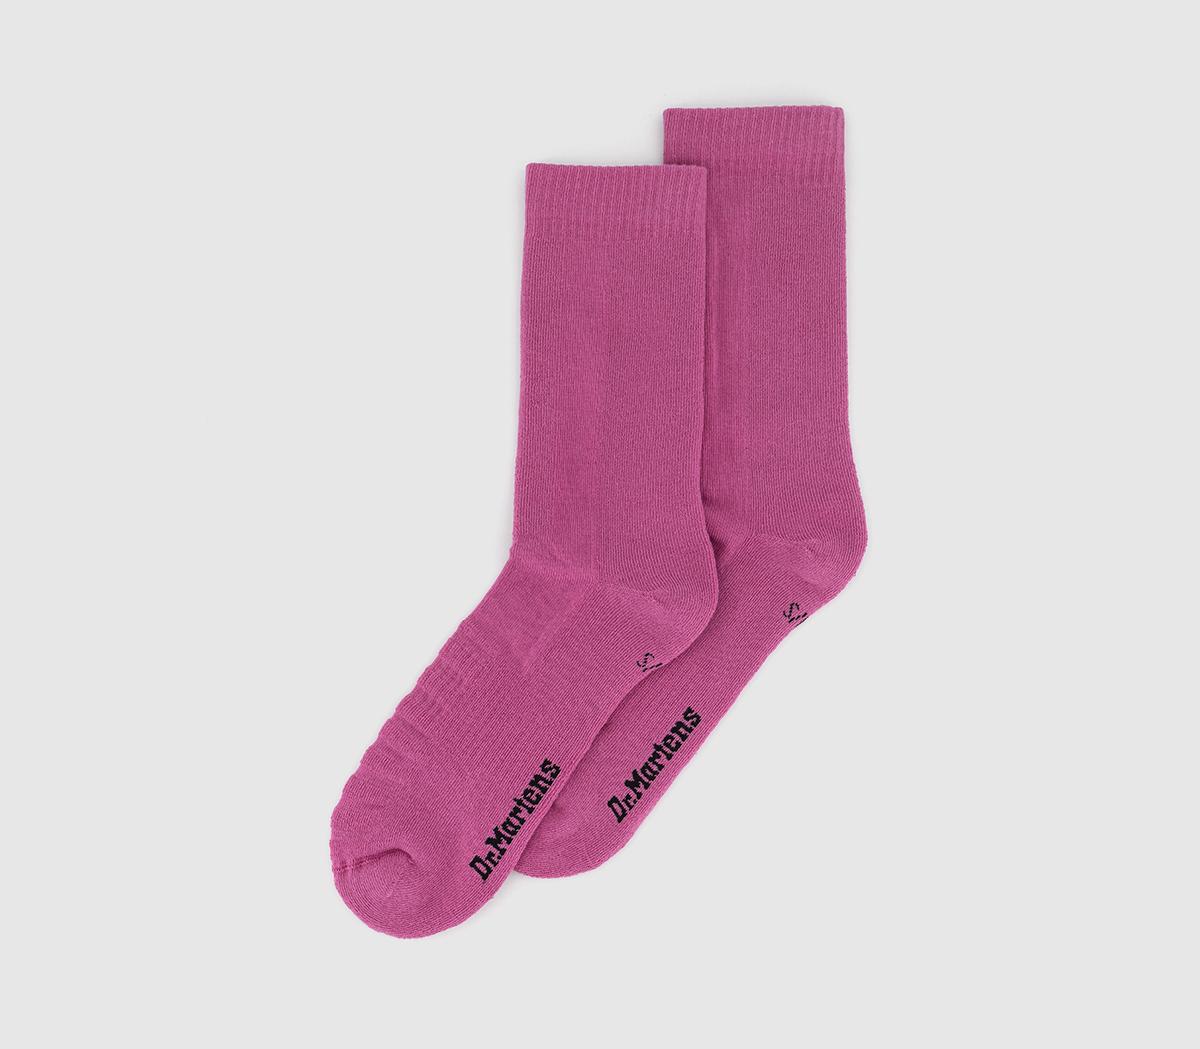 Dr. Martens Double Doc Socks Thrift Pink, M/l